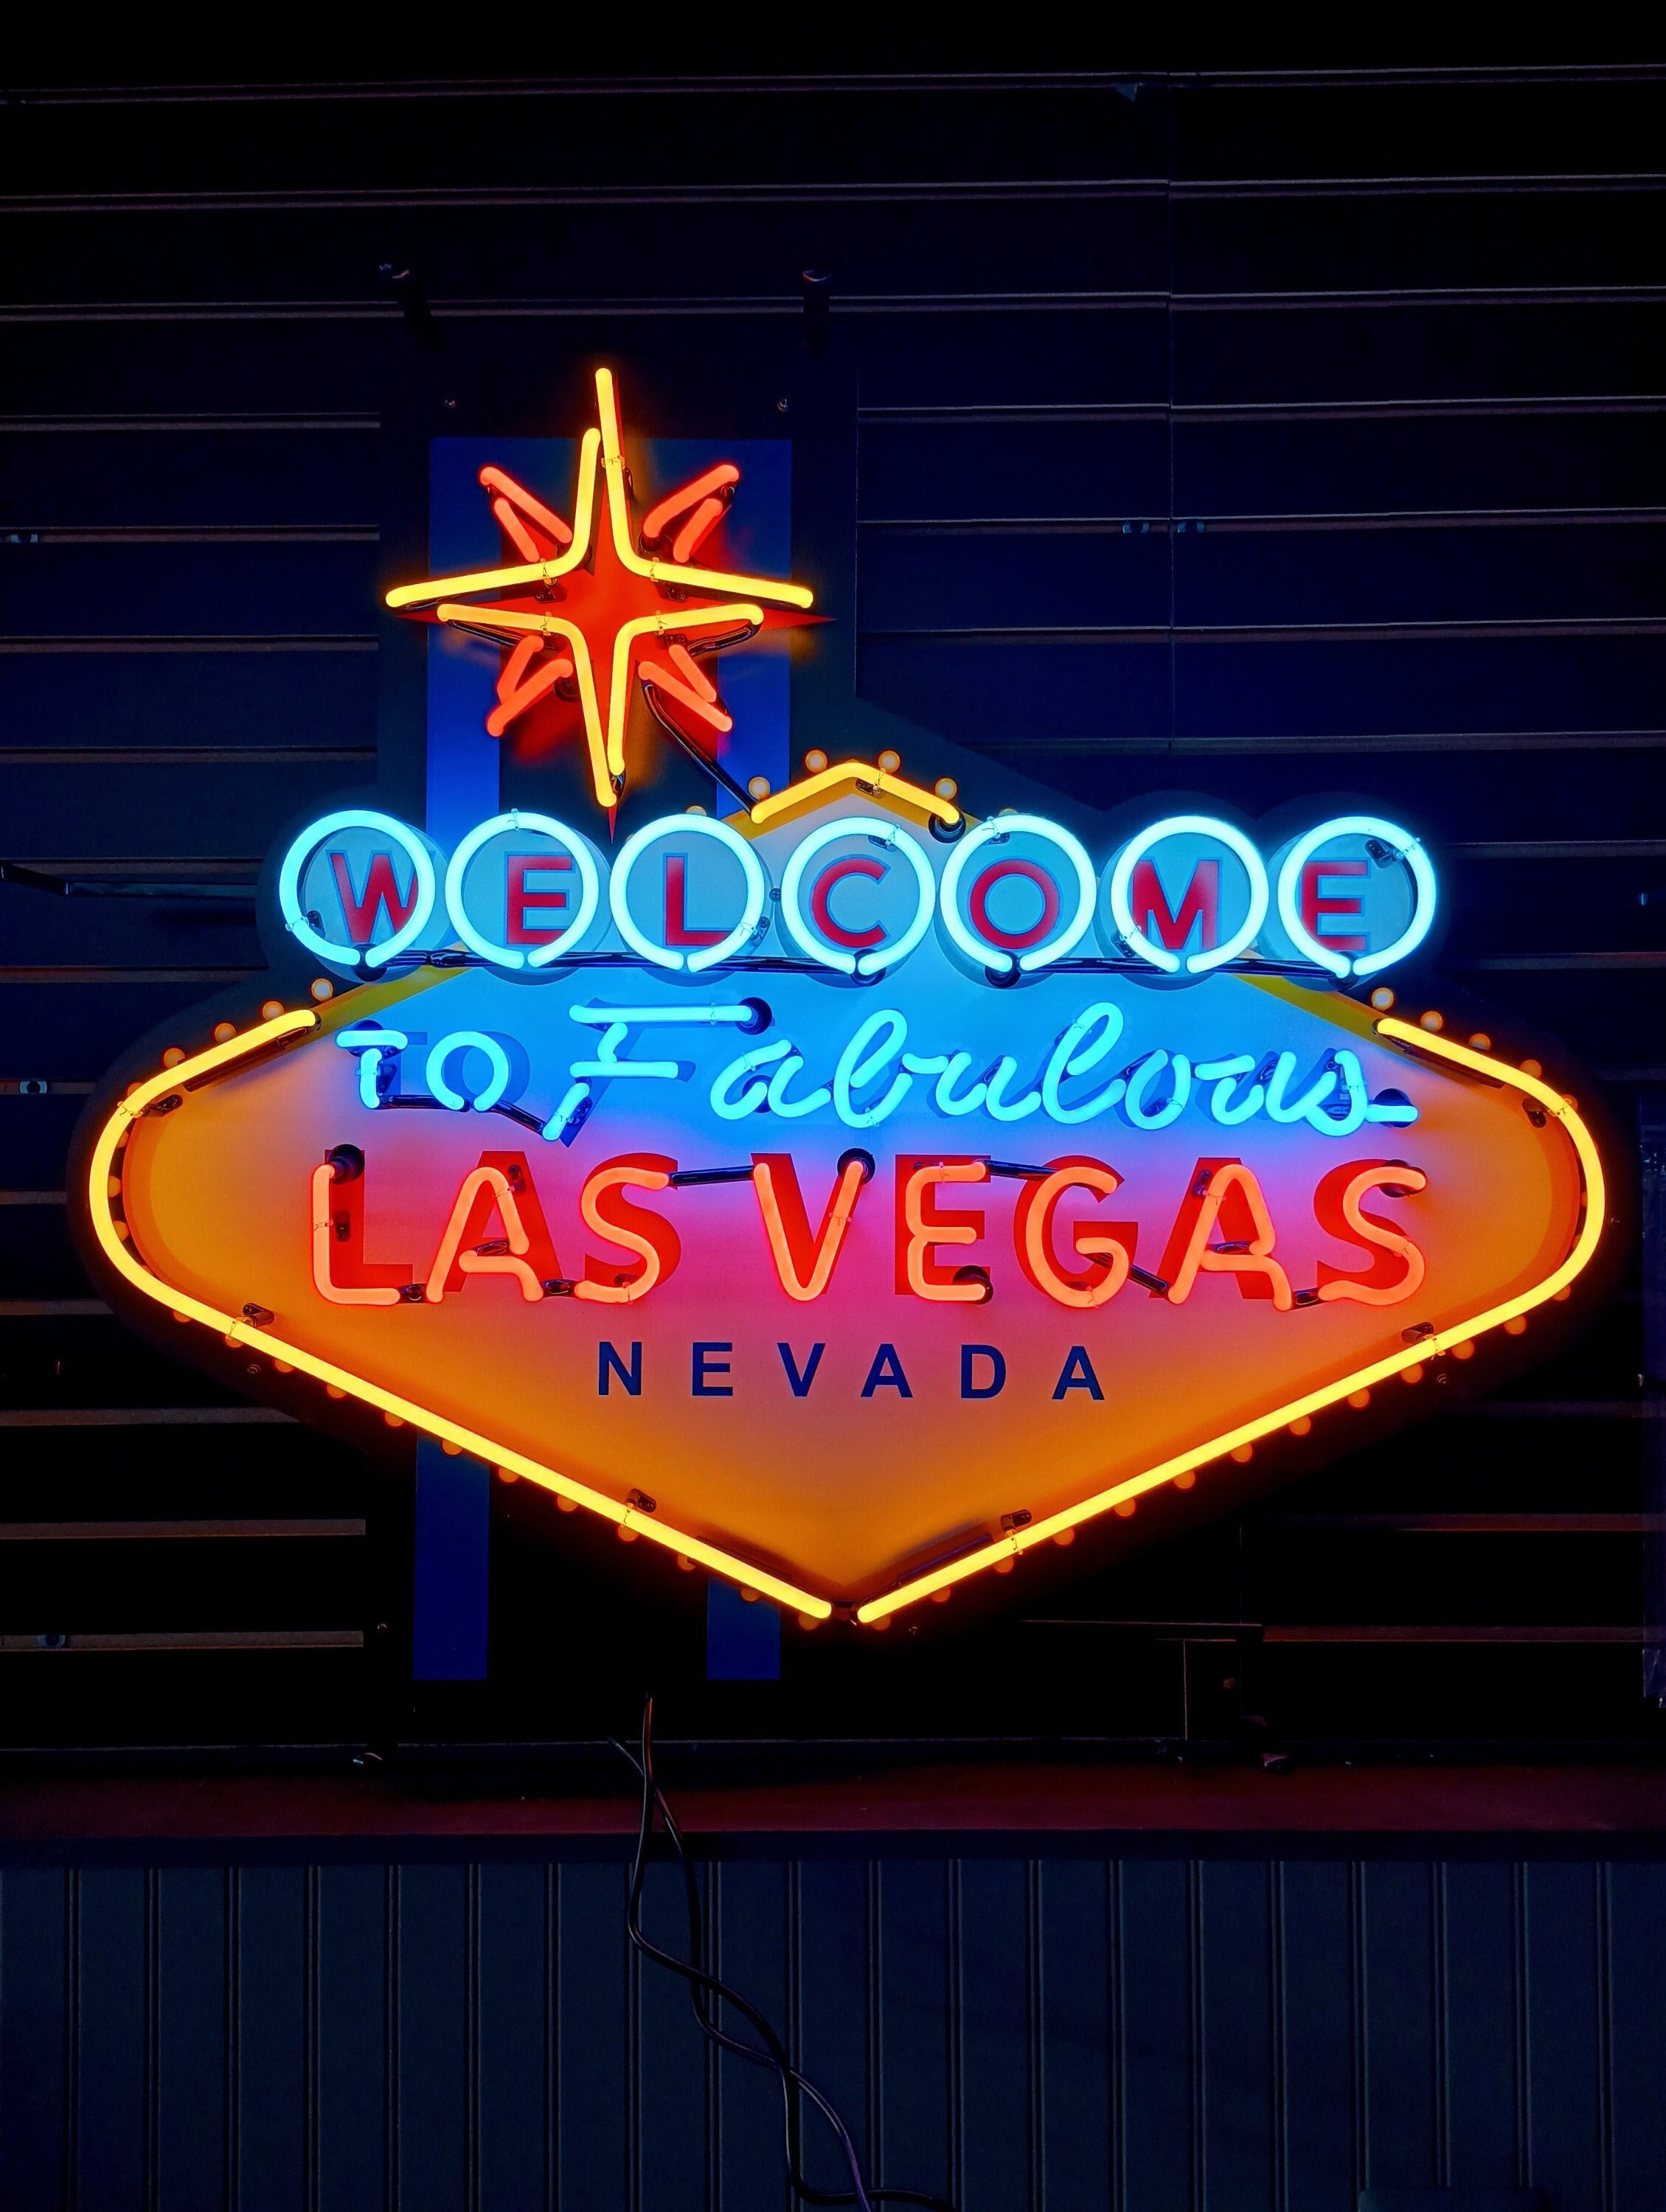 Retro Welcome to Fabulous Las Vegas Nevada Bar Neon Light Metal